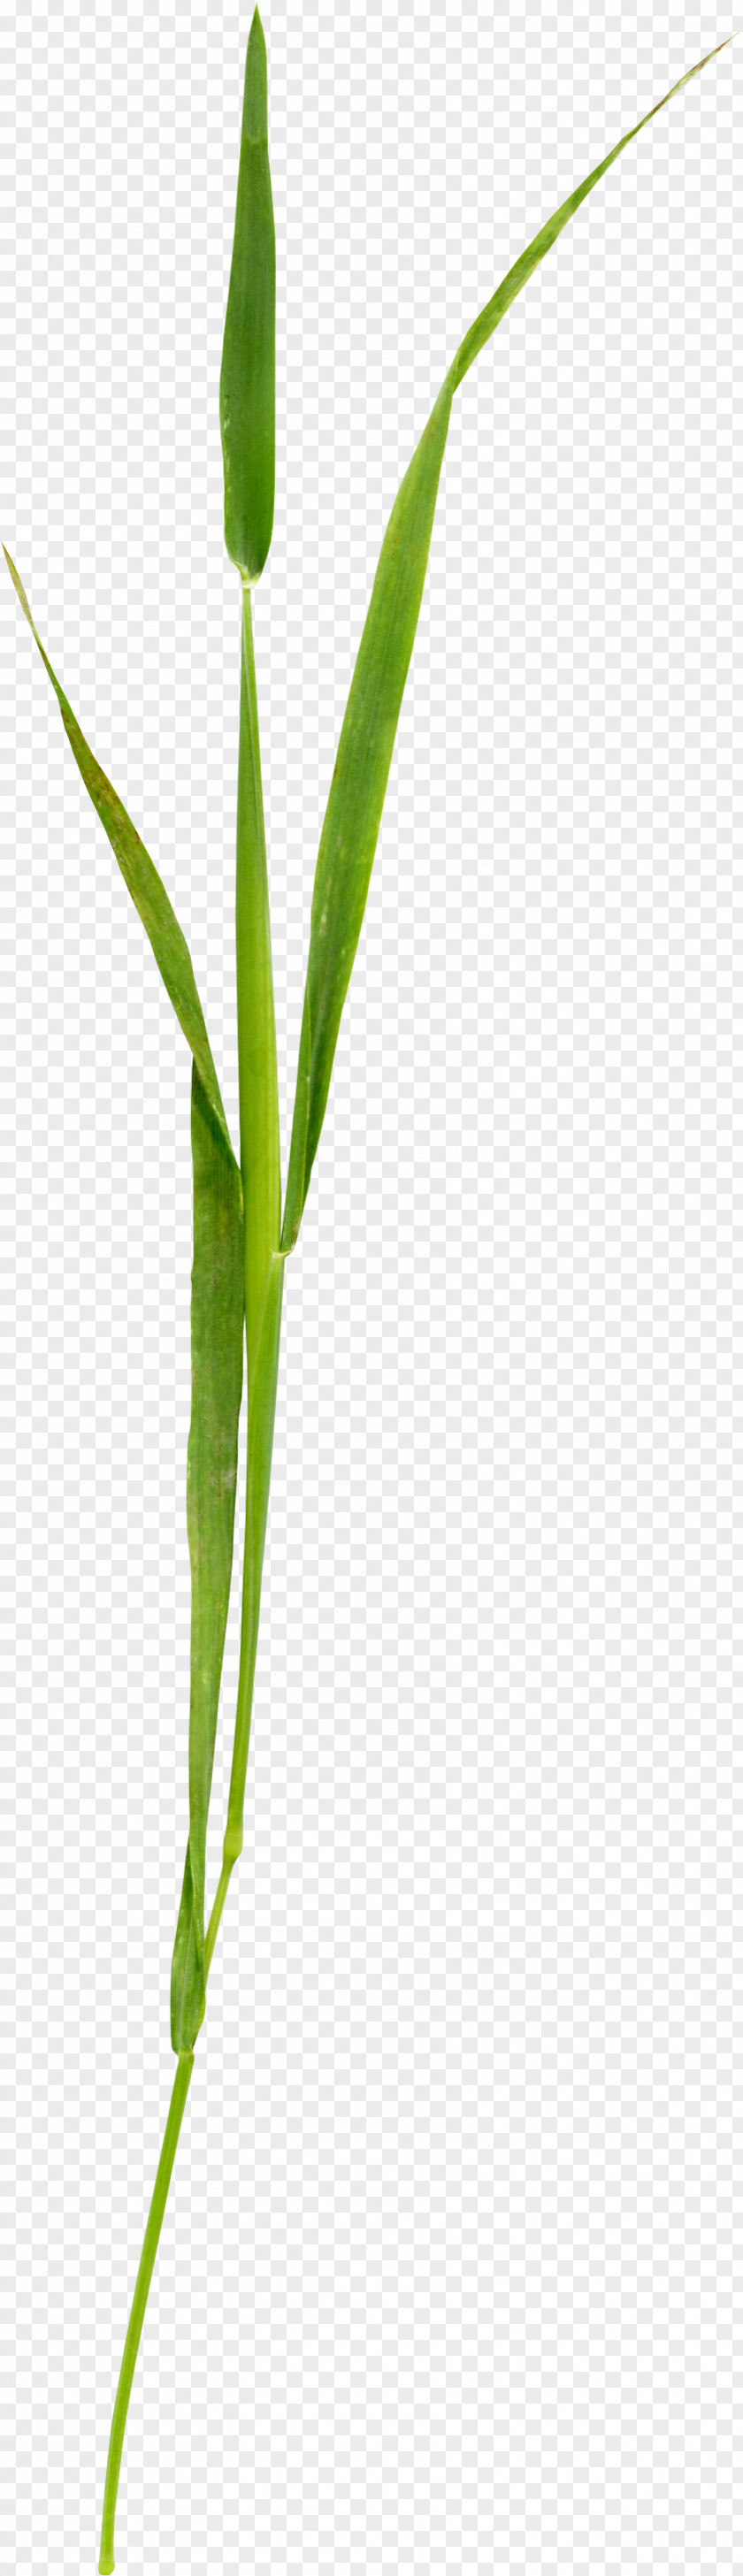 Beautiful Green Grass Twig Grasses Plant Stem Leaf Close-up PNG